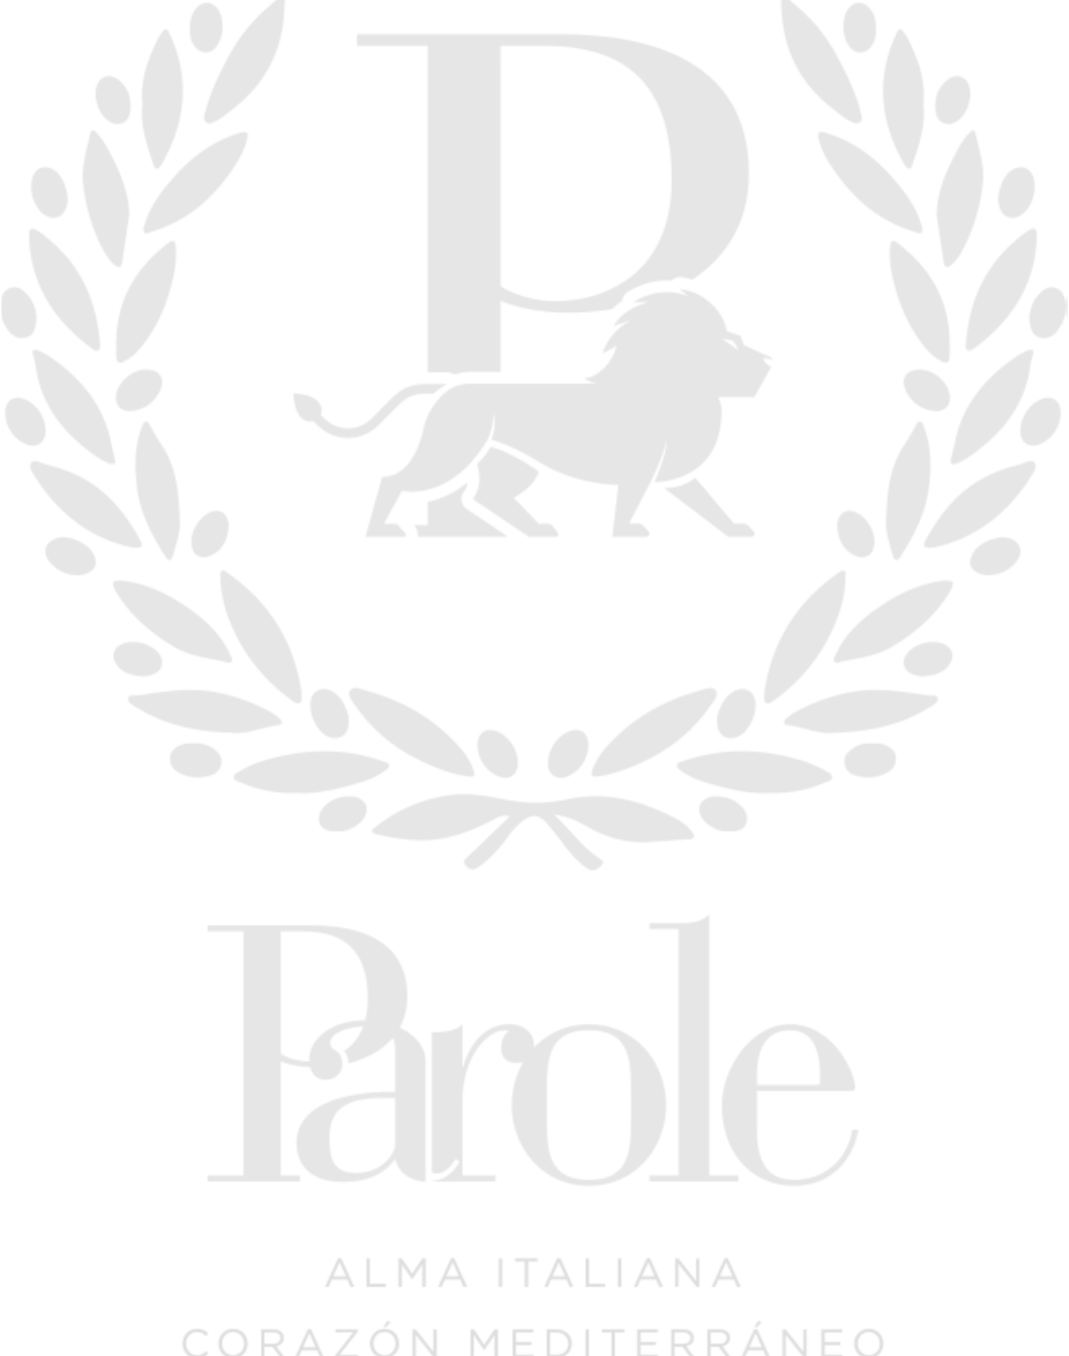 LOGOS_PAROLE_VECTORIAL-1-3-_1_-1